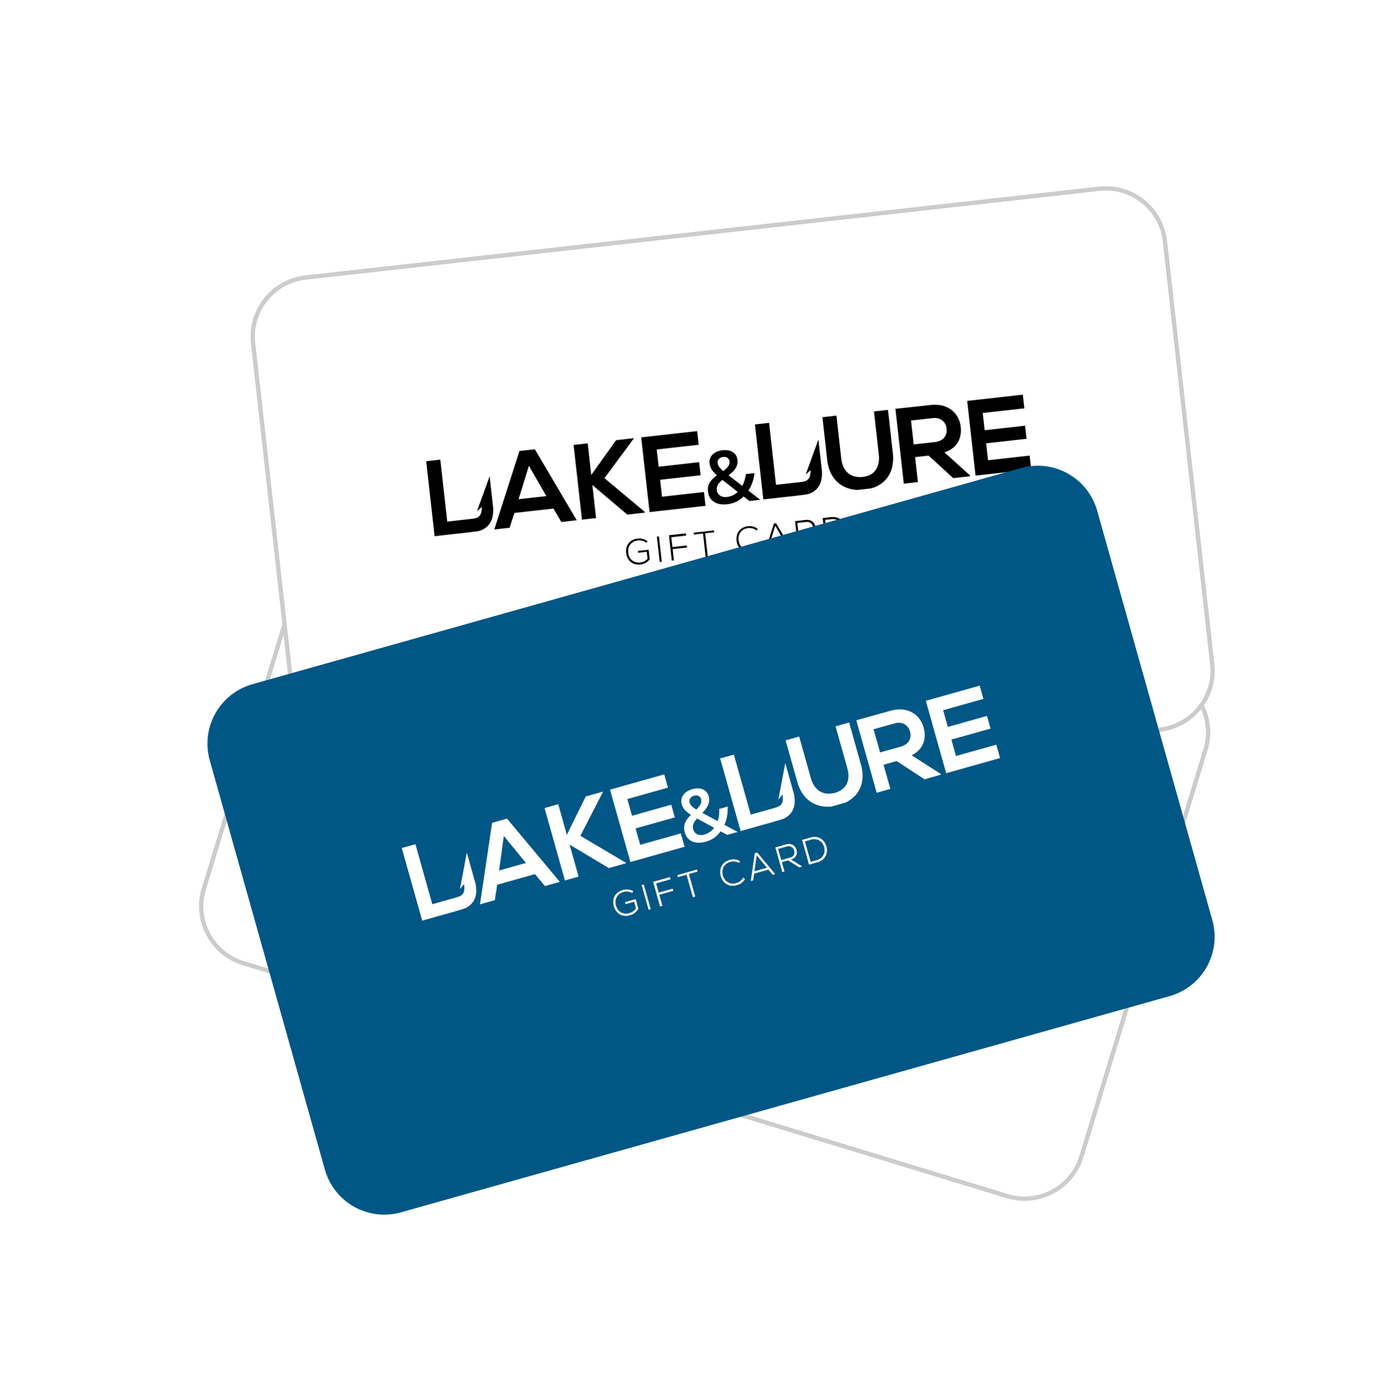 Lake&Lure Gift Cards